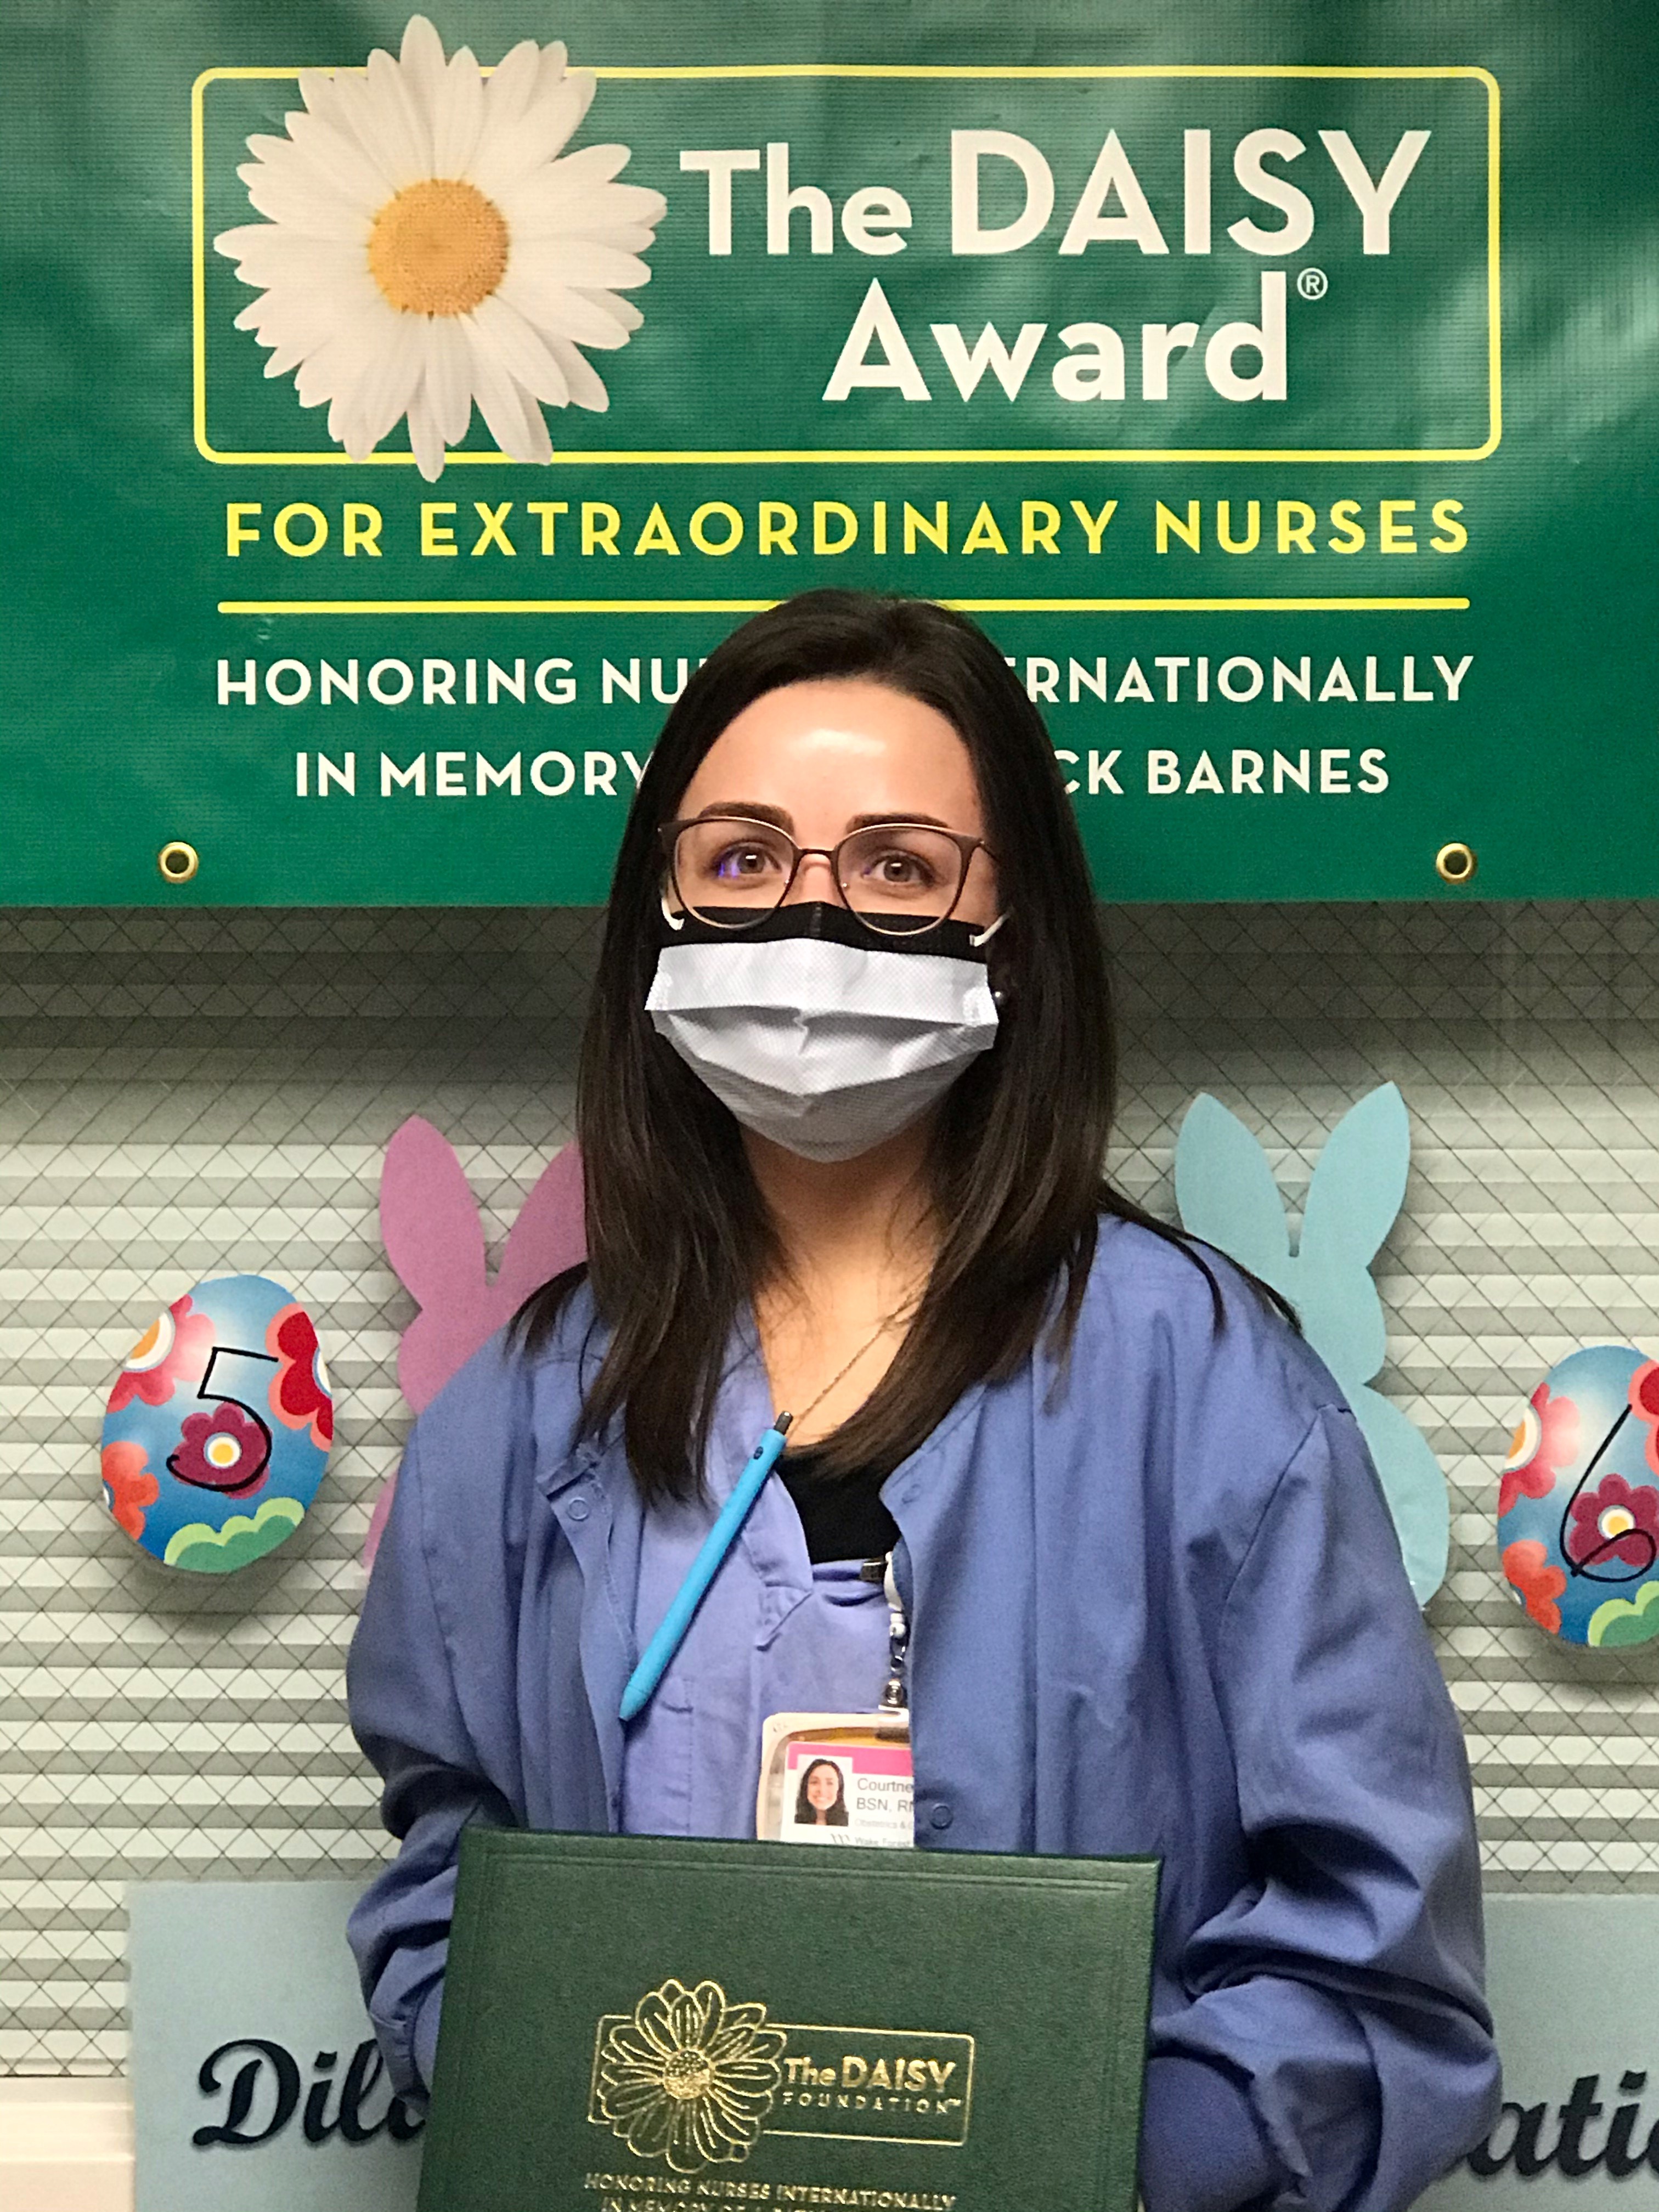 Wilkes Medical Center proudly announced Courtney Dula, RN as the hospital’s latest DAISY Award winner on April 20, 2021.